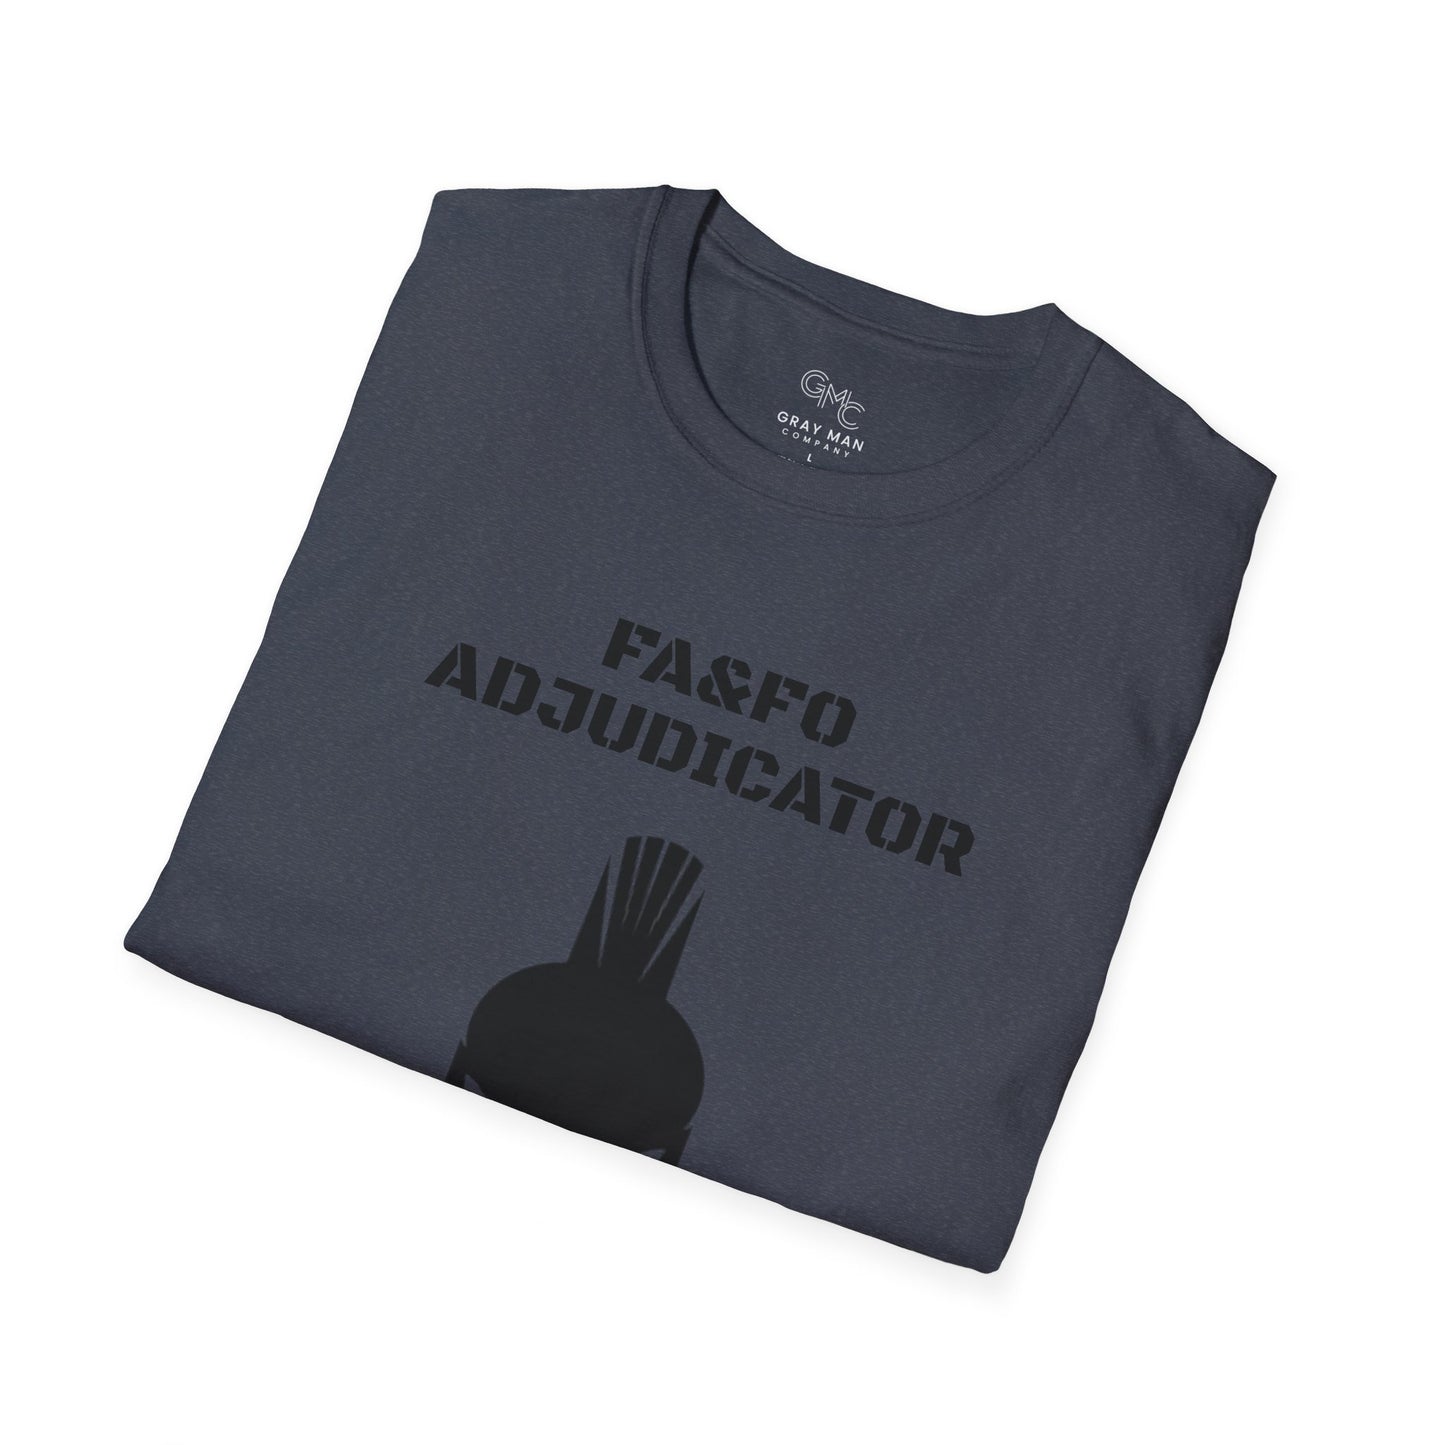 EDC Graphic T-Shirt - FA&FO ADJUDICATOR